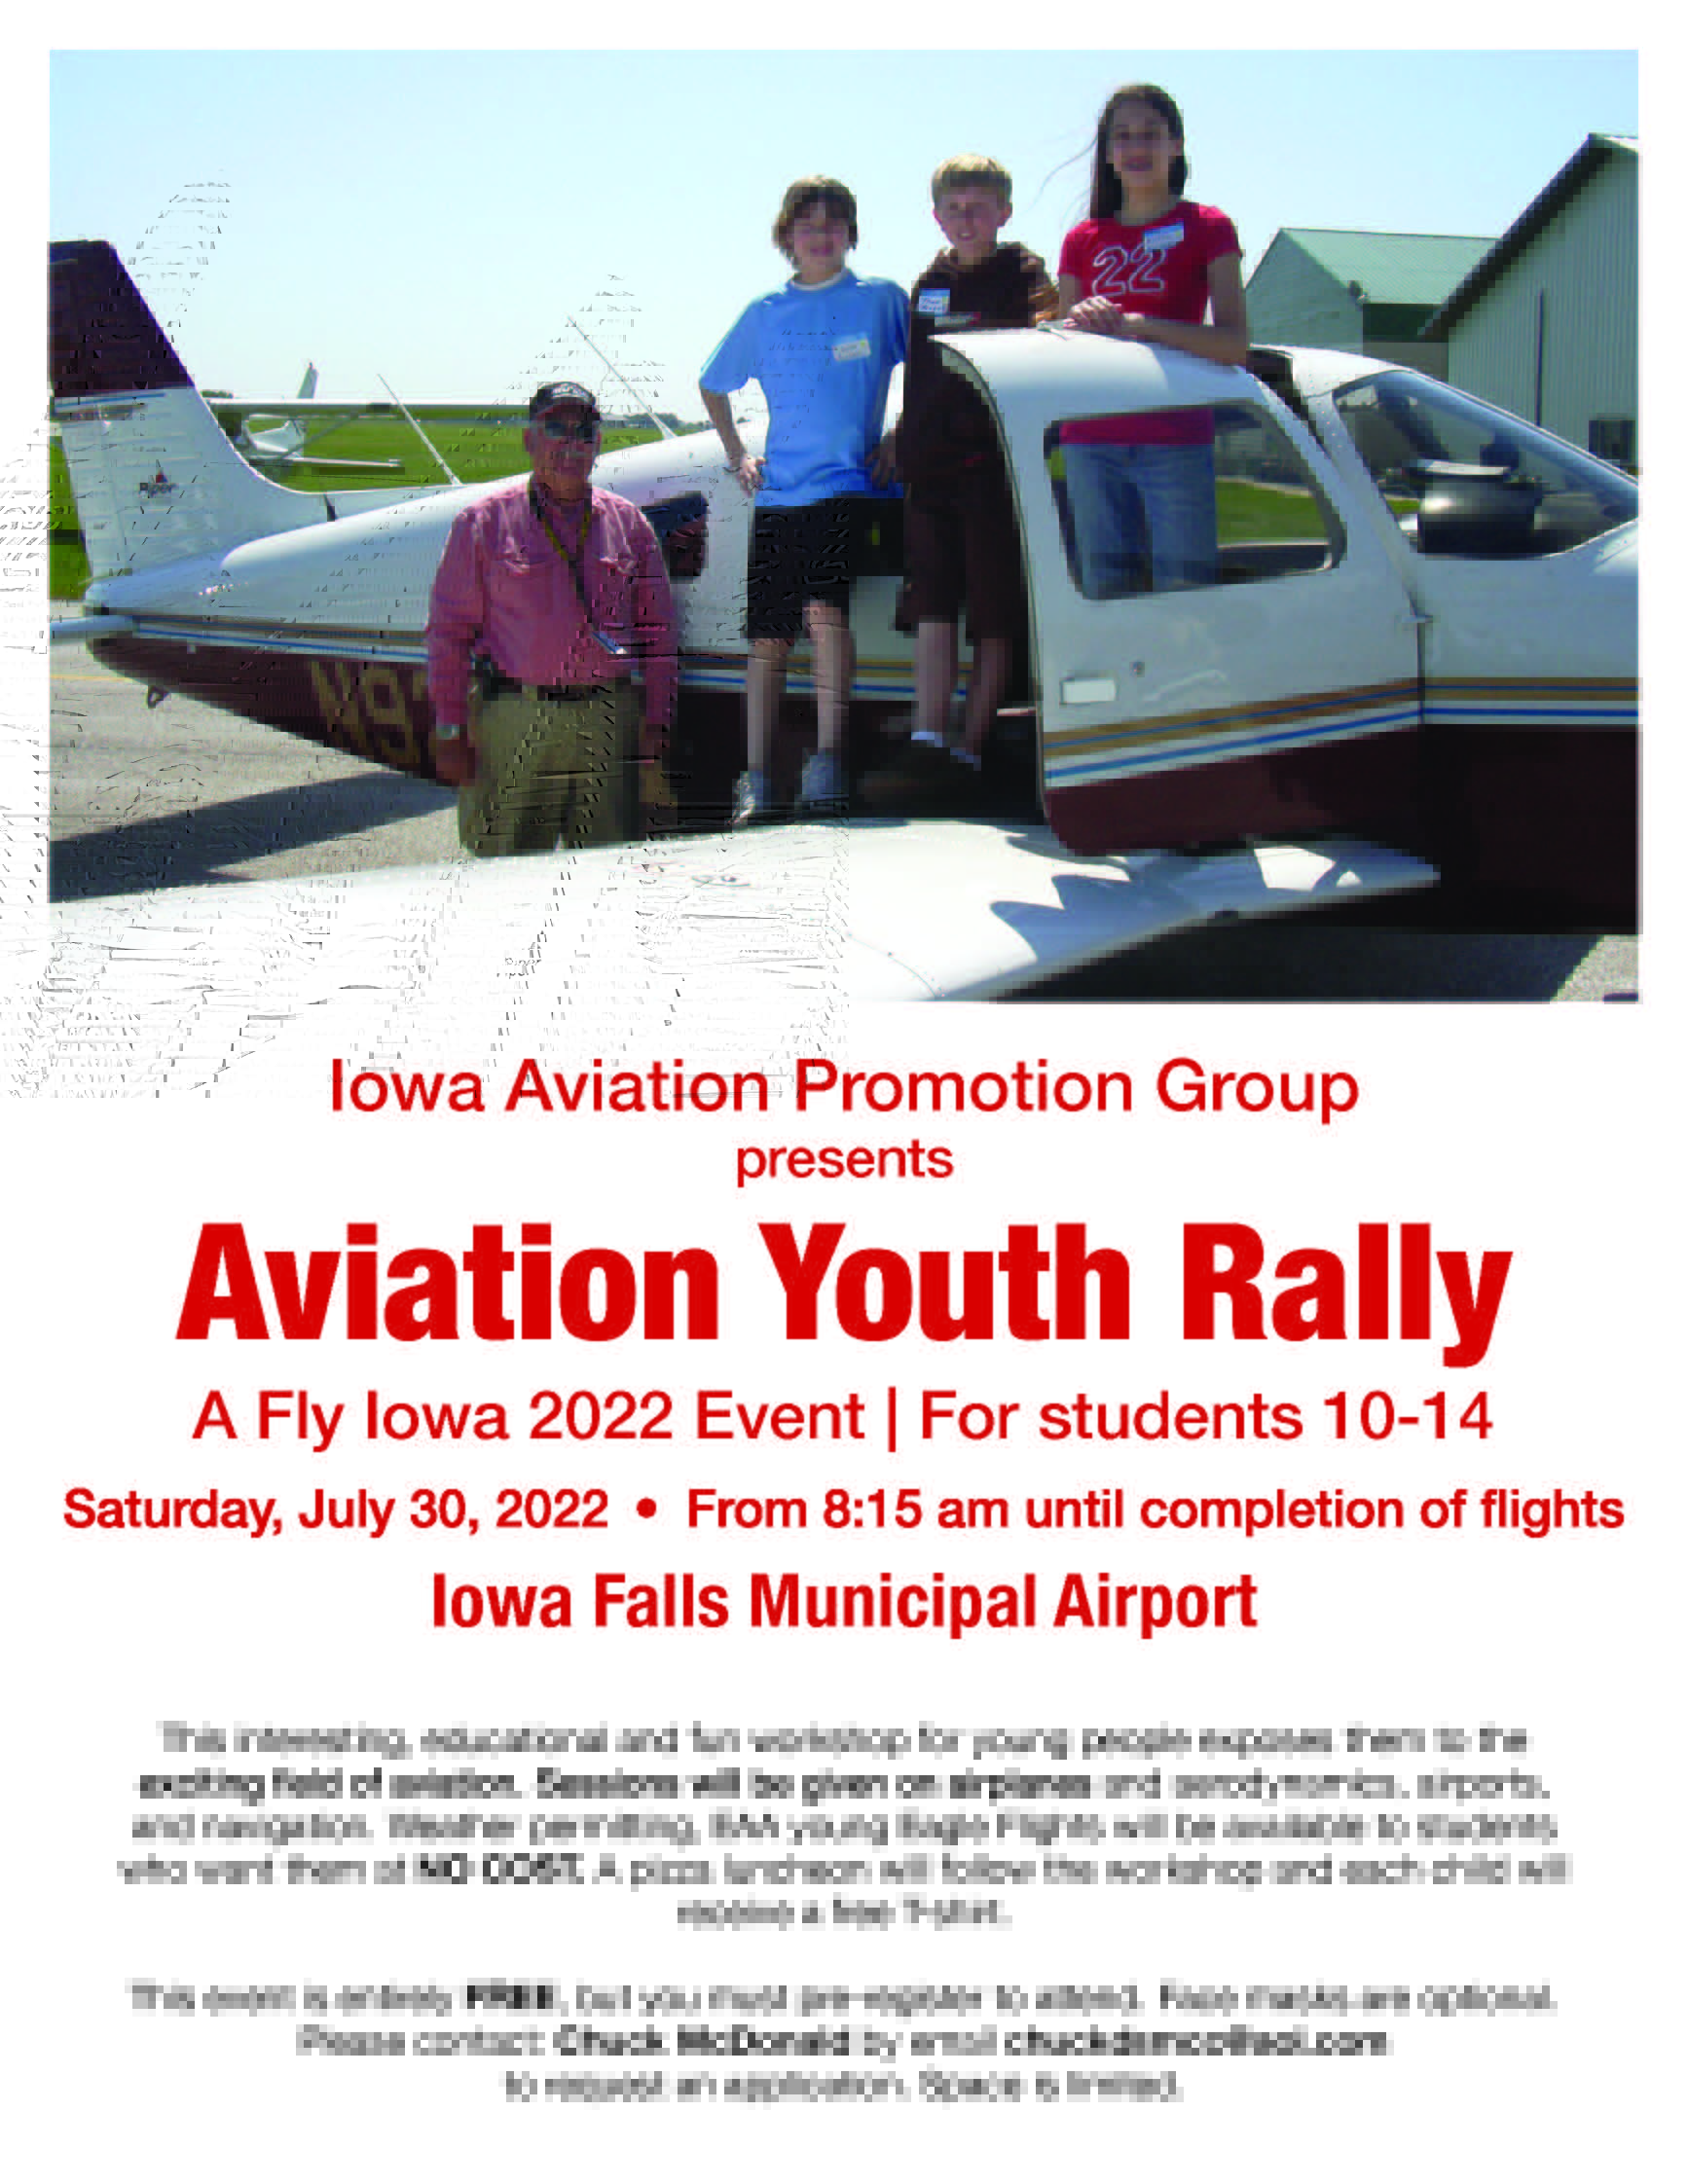 Aviation Youth Rally 2022